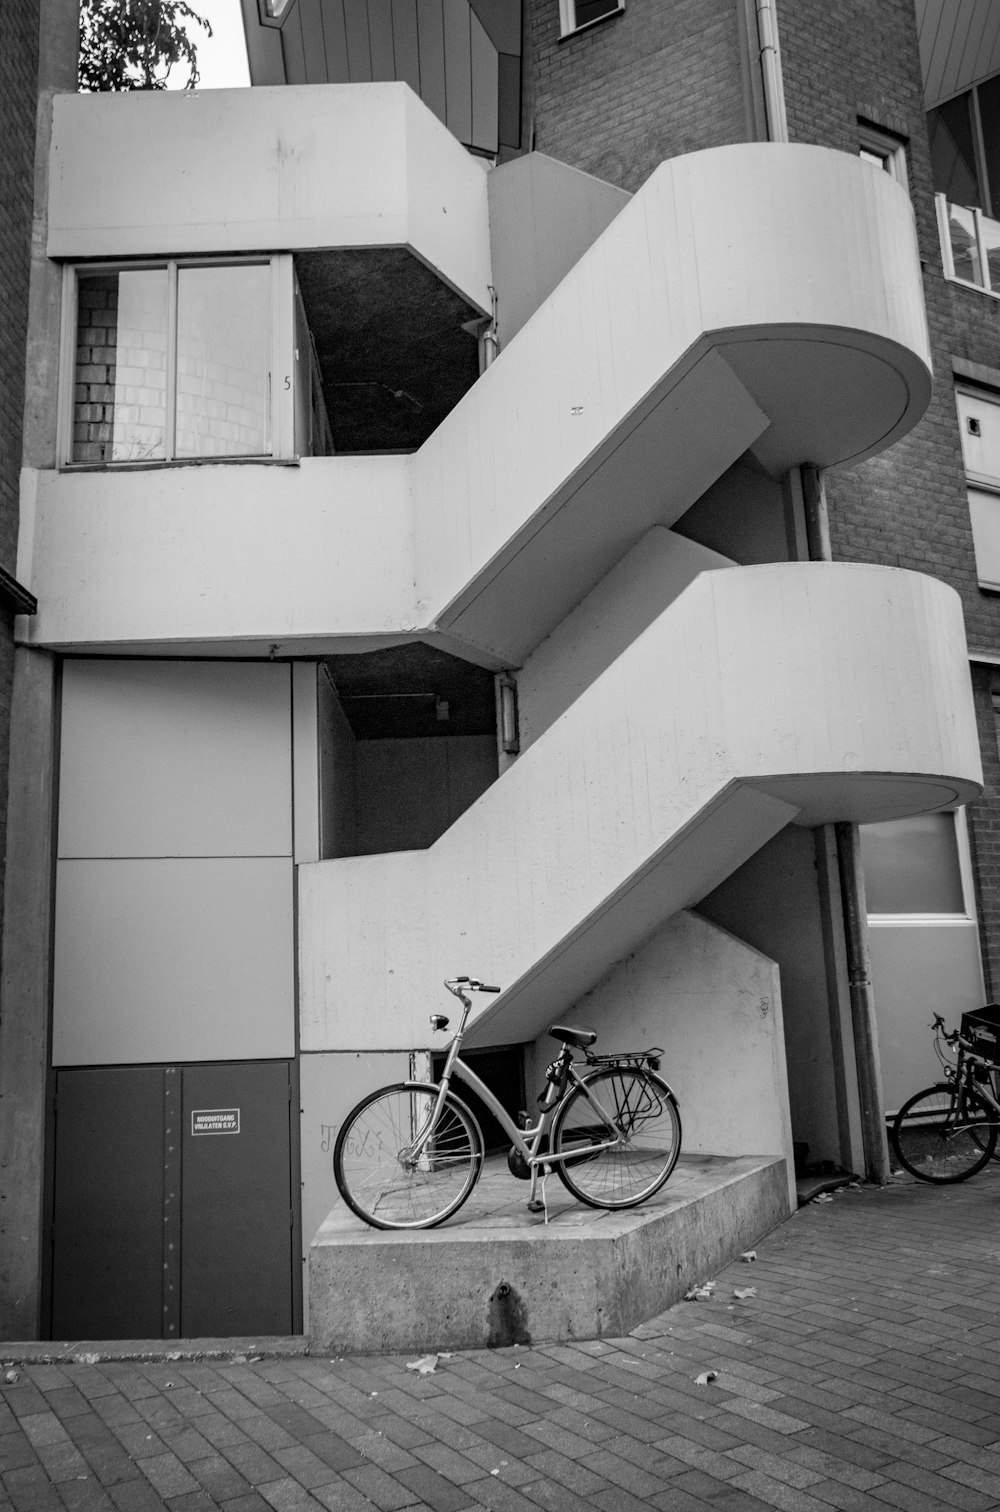 bike parking near building